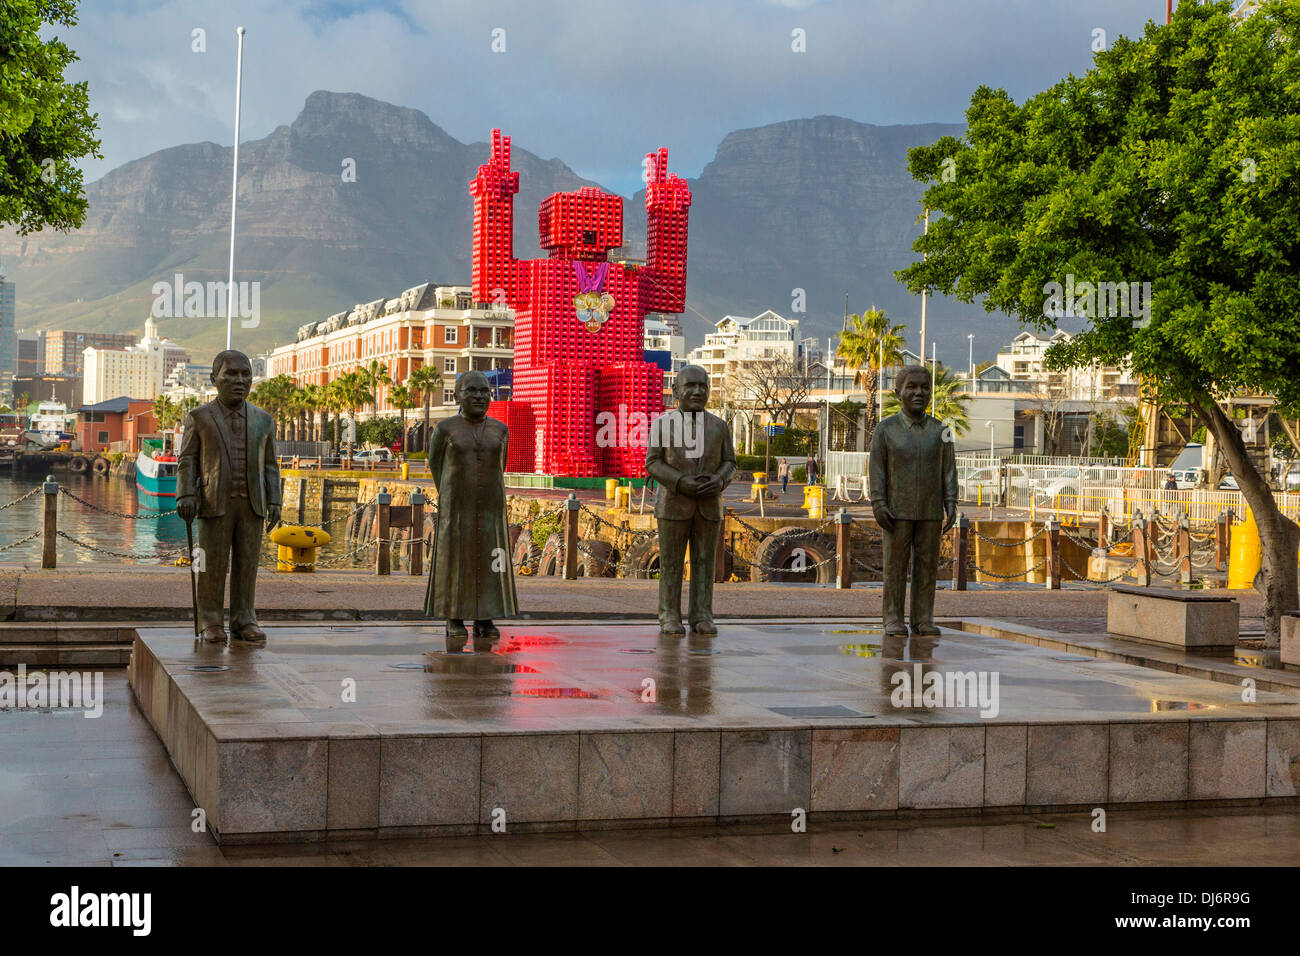 Sudáfrica, Cape Town. Las estatuas de la plaza Nobel Albert Luthuli, Desmond Tutu, FW de Klerk y Nelson Mandela. Foto de stock